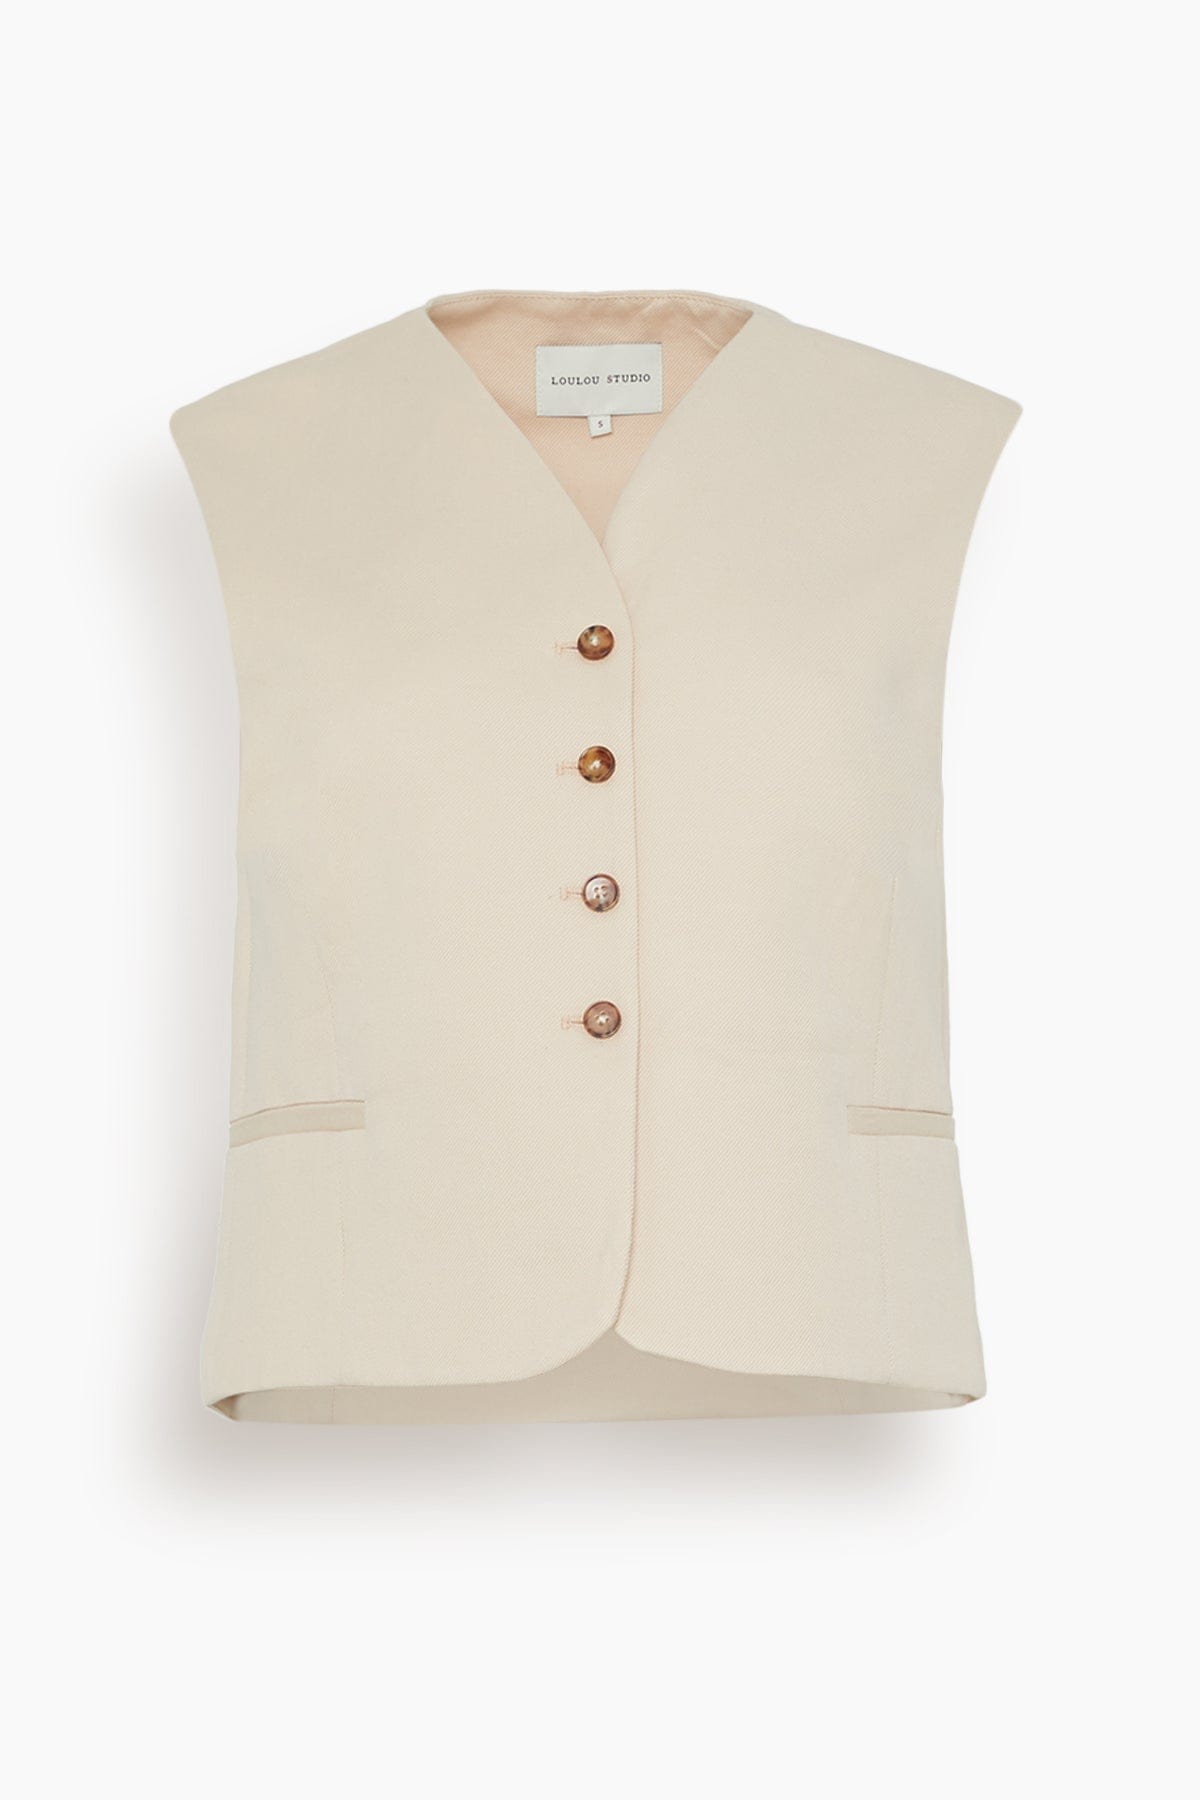 Loulou Studio Tops Iba Vest in Cream Rose